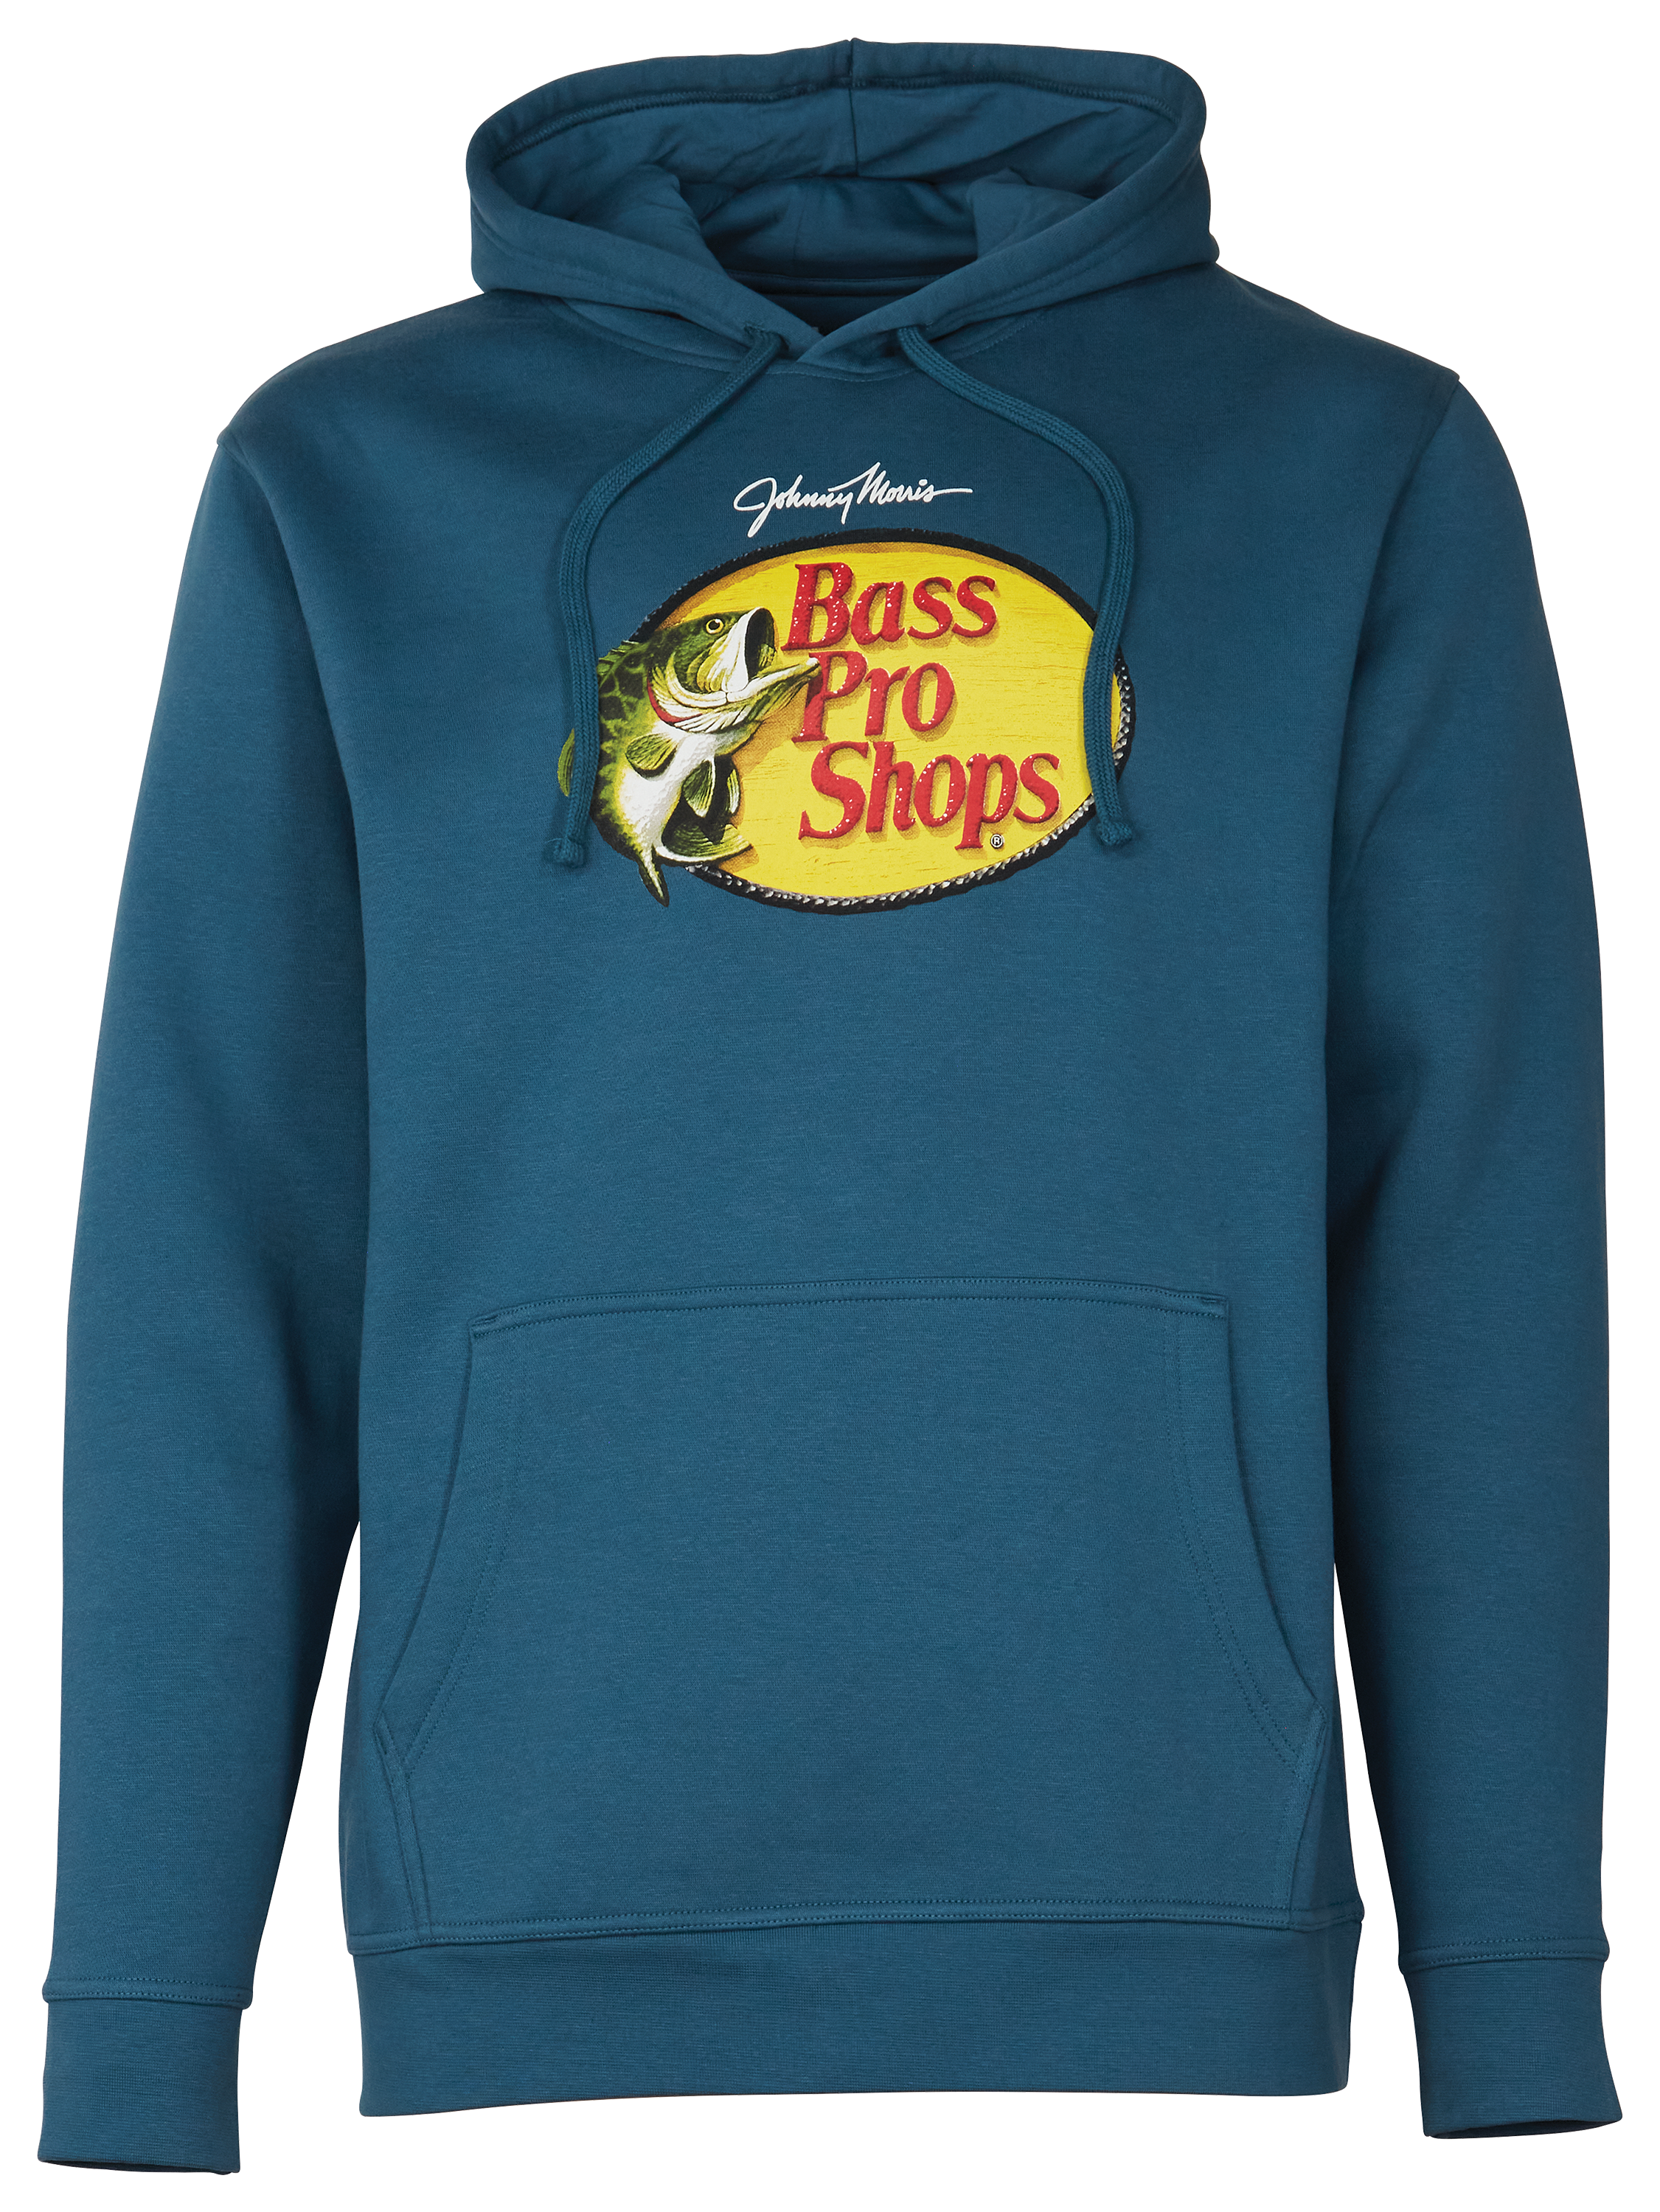 Bass Pro Shops Logo Long-Sleeve Hoodie - Jet Set - M